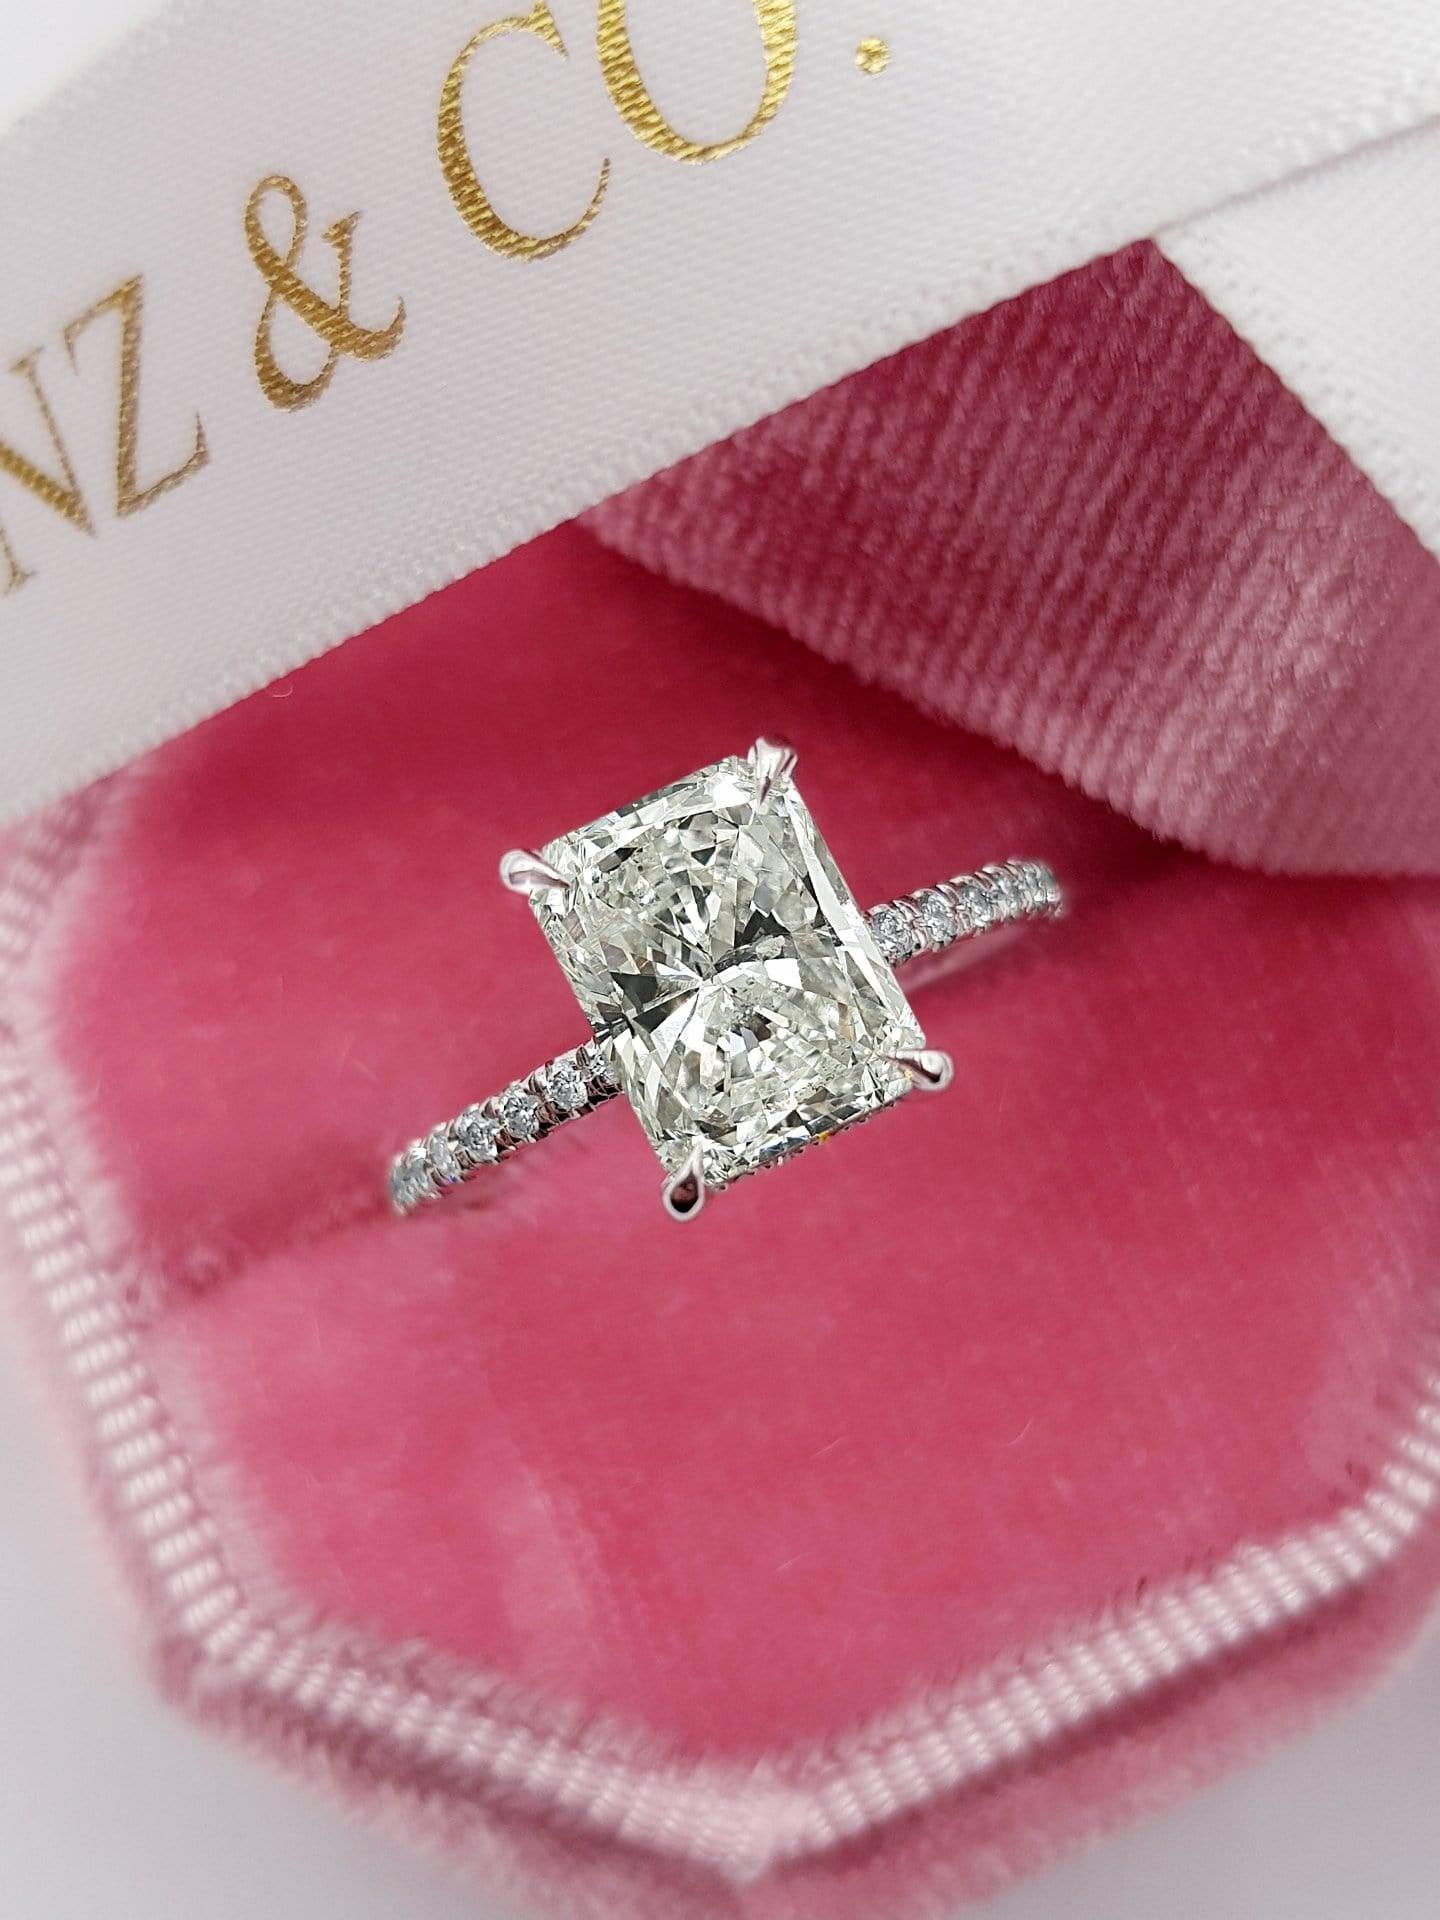 Campagna 2 carat elongated radiant cut engagement ring